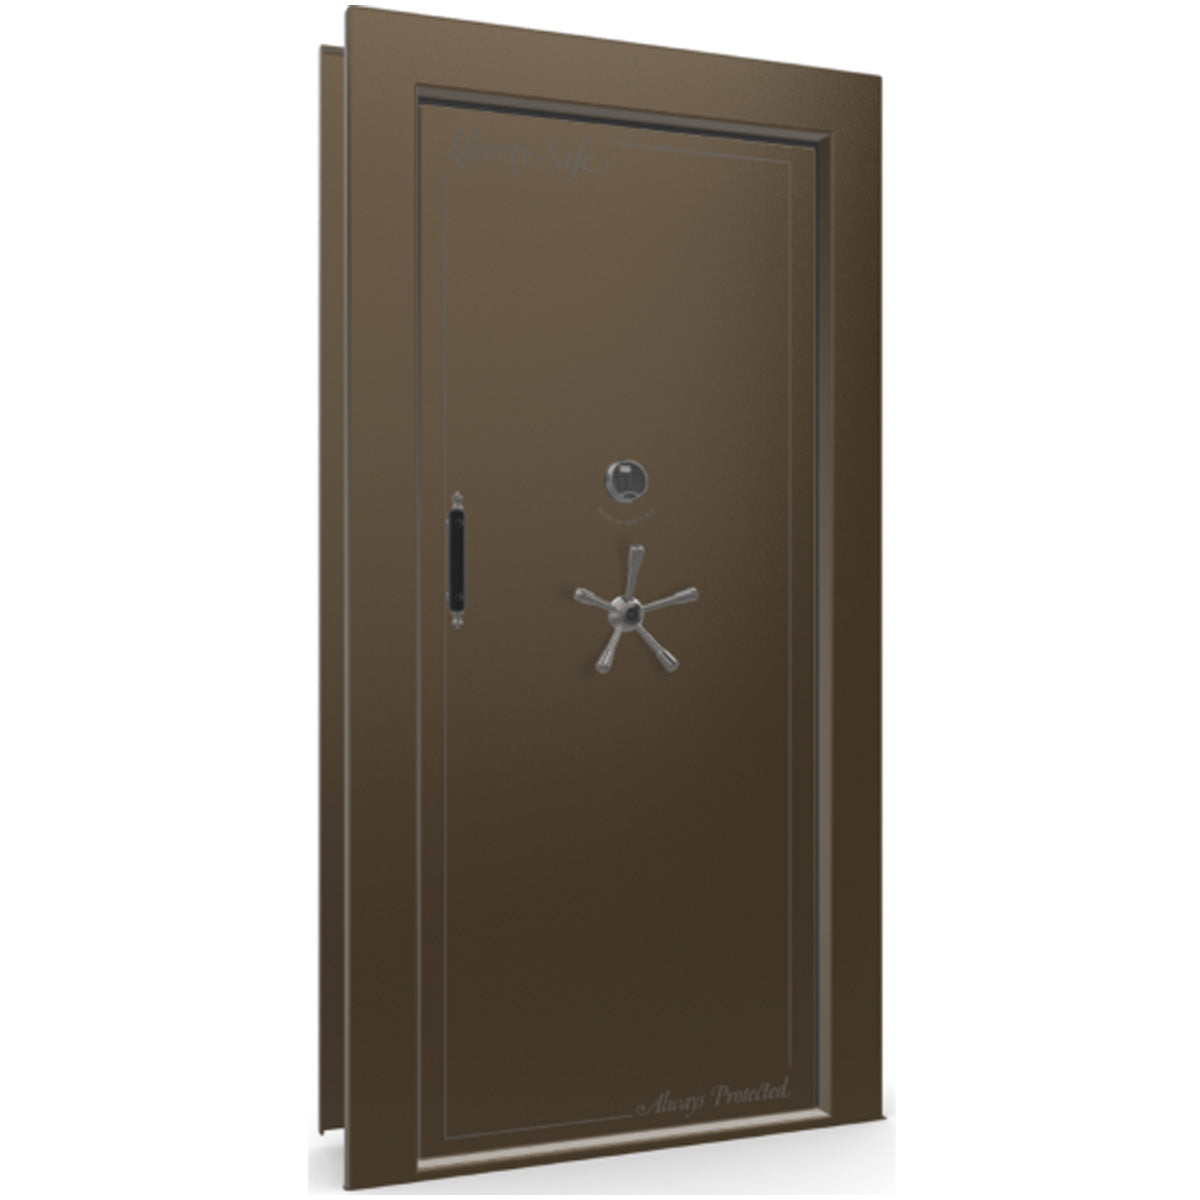 The Beast Vault Door in Bronze Gloss with Black Chrome Electronic Lock, Right Inswing, door closed.